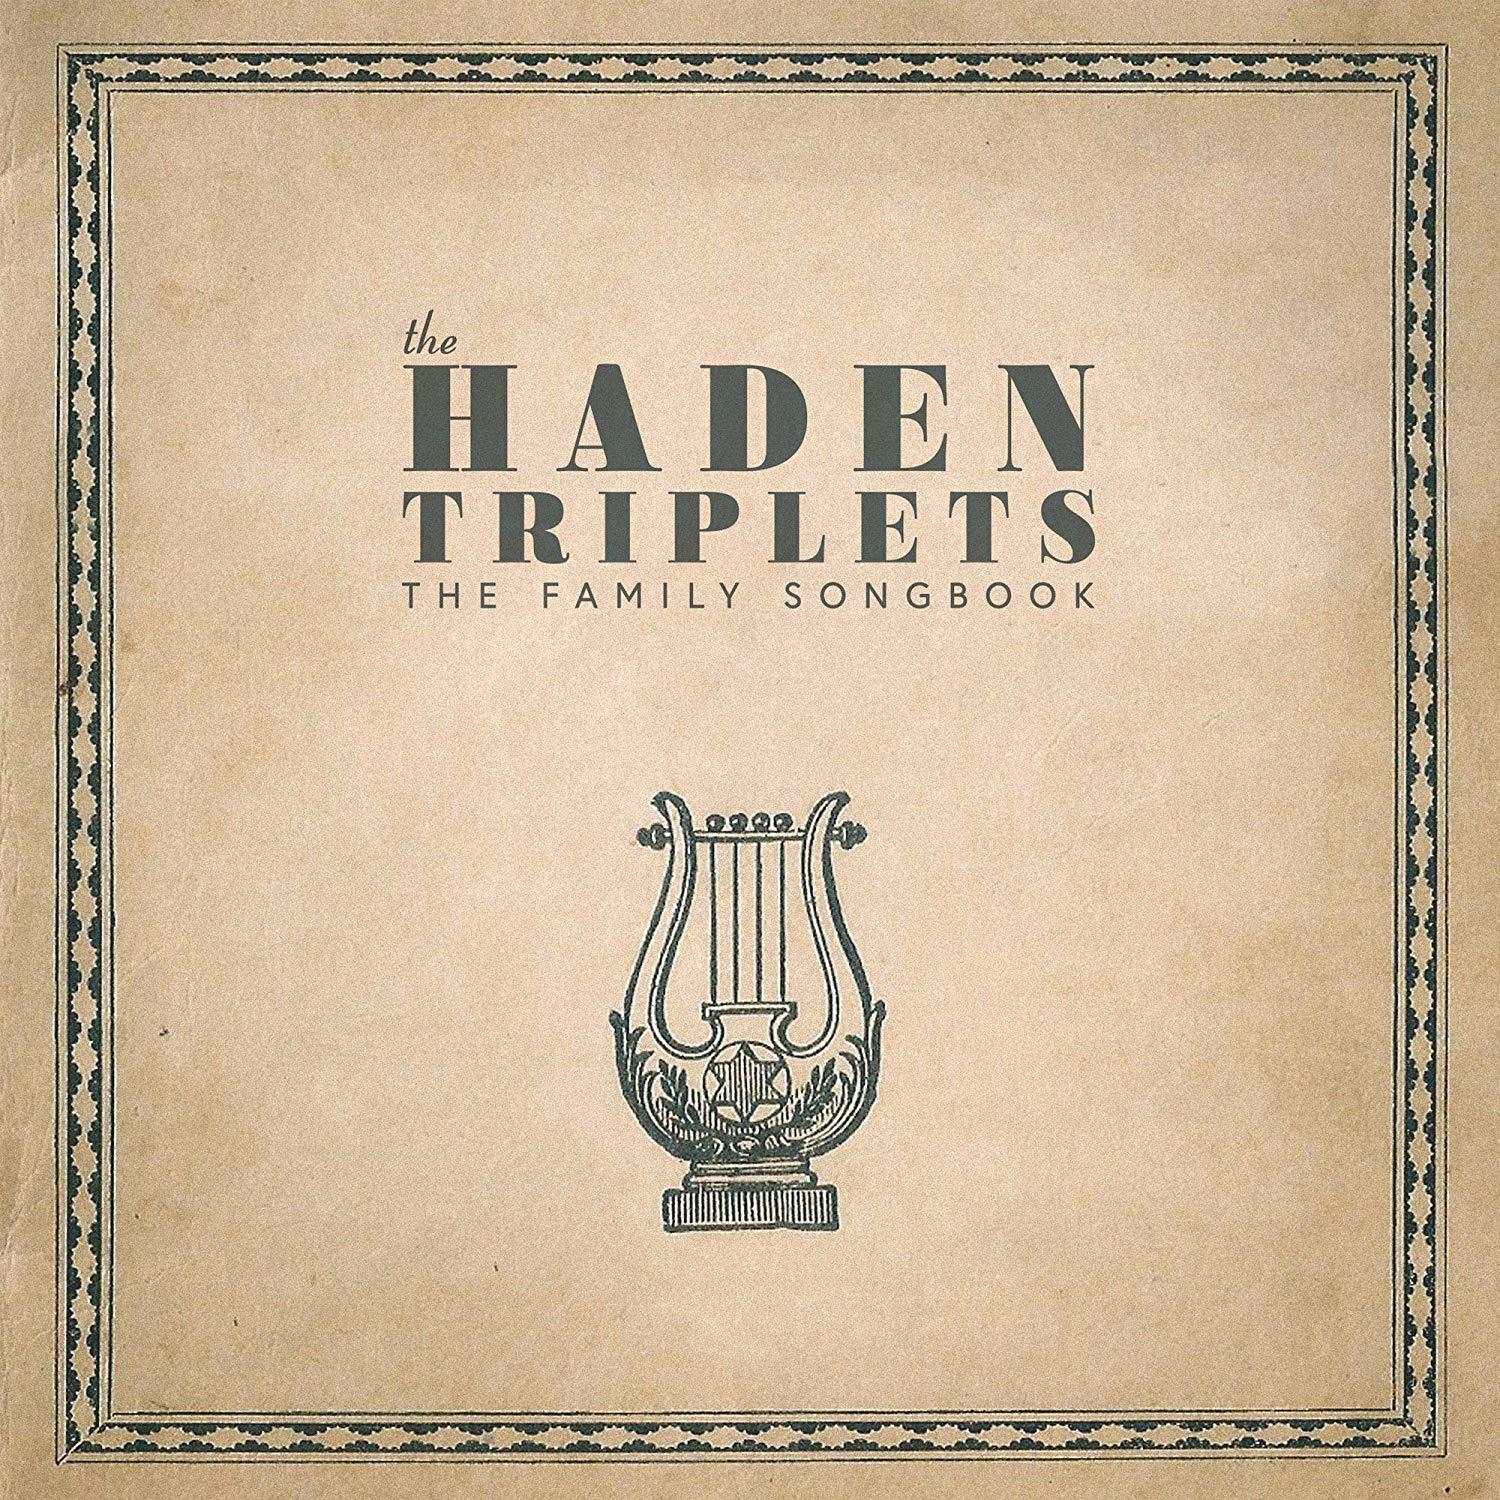 (Vinyl) FAMILY SONGBOOK - - Haden The Triplets